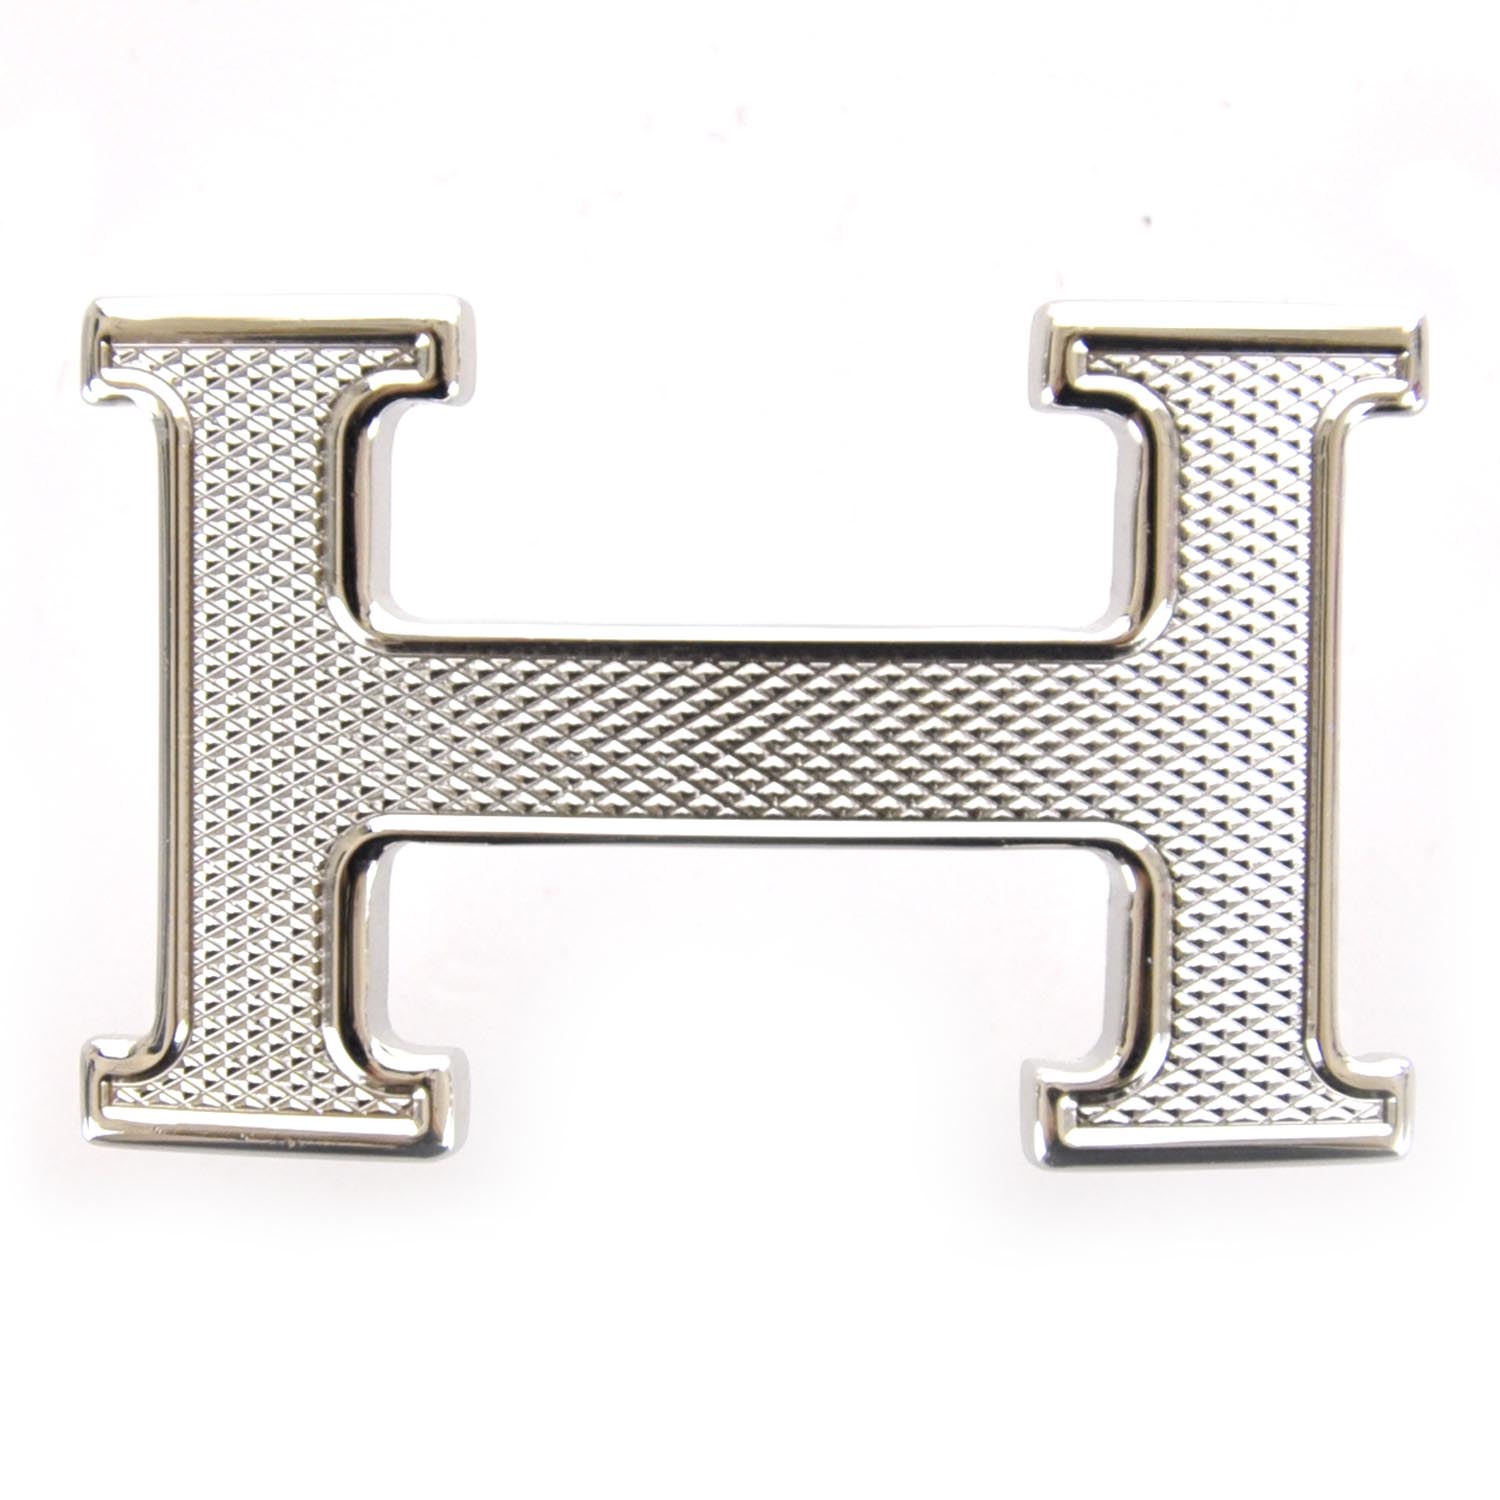 h belt logo